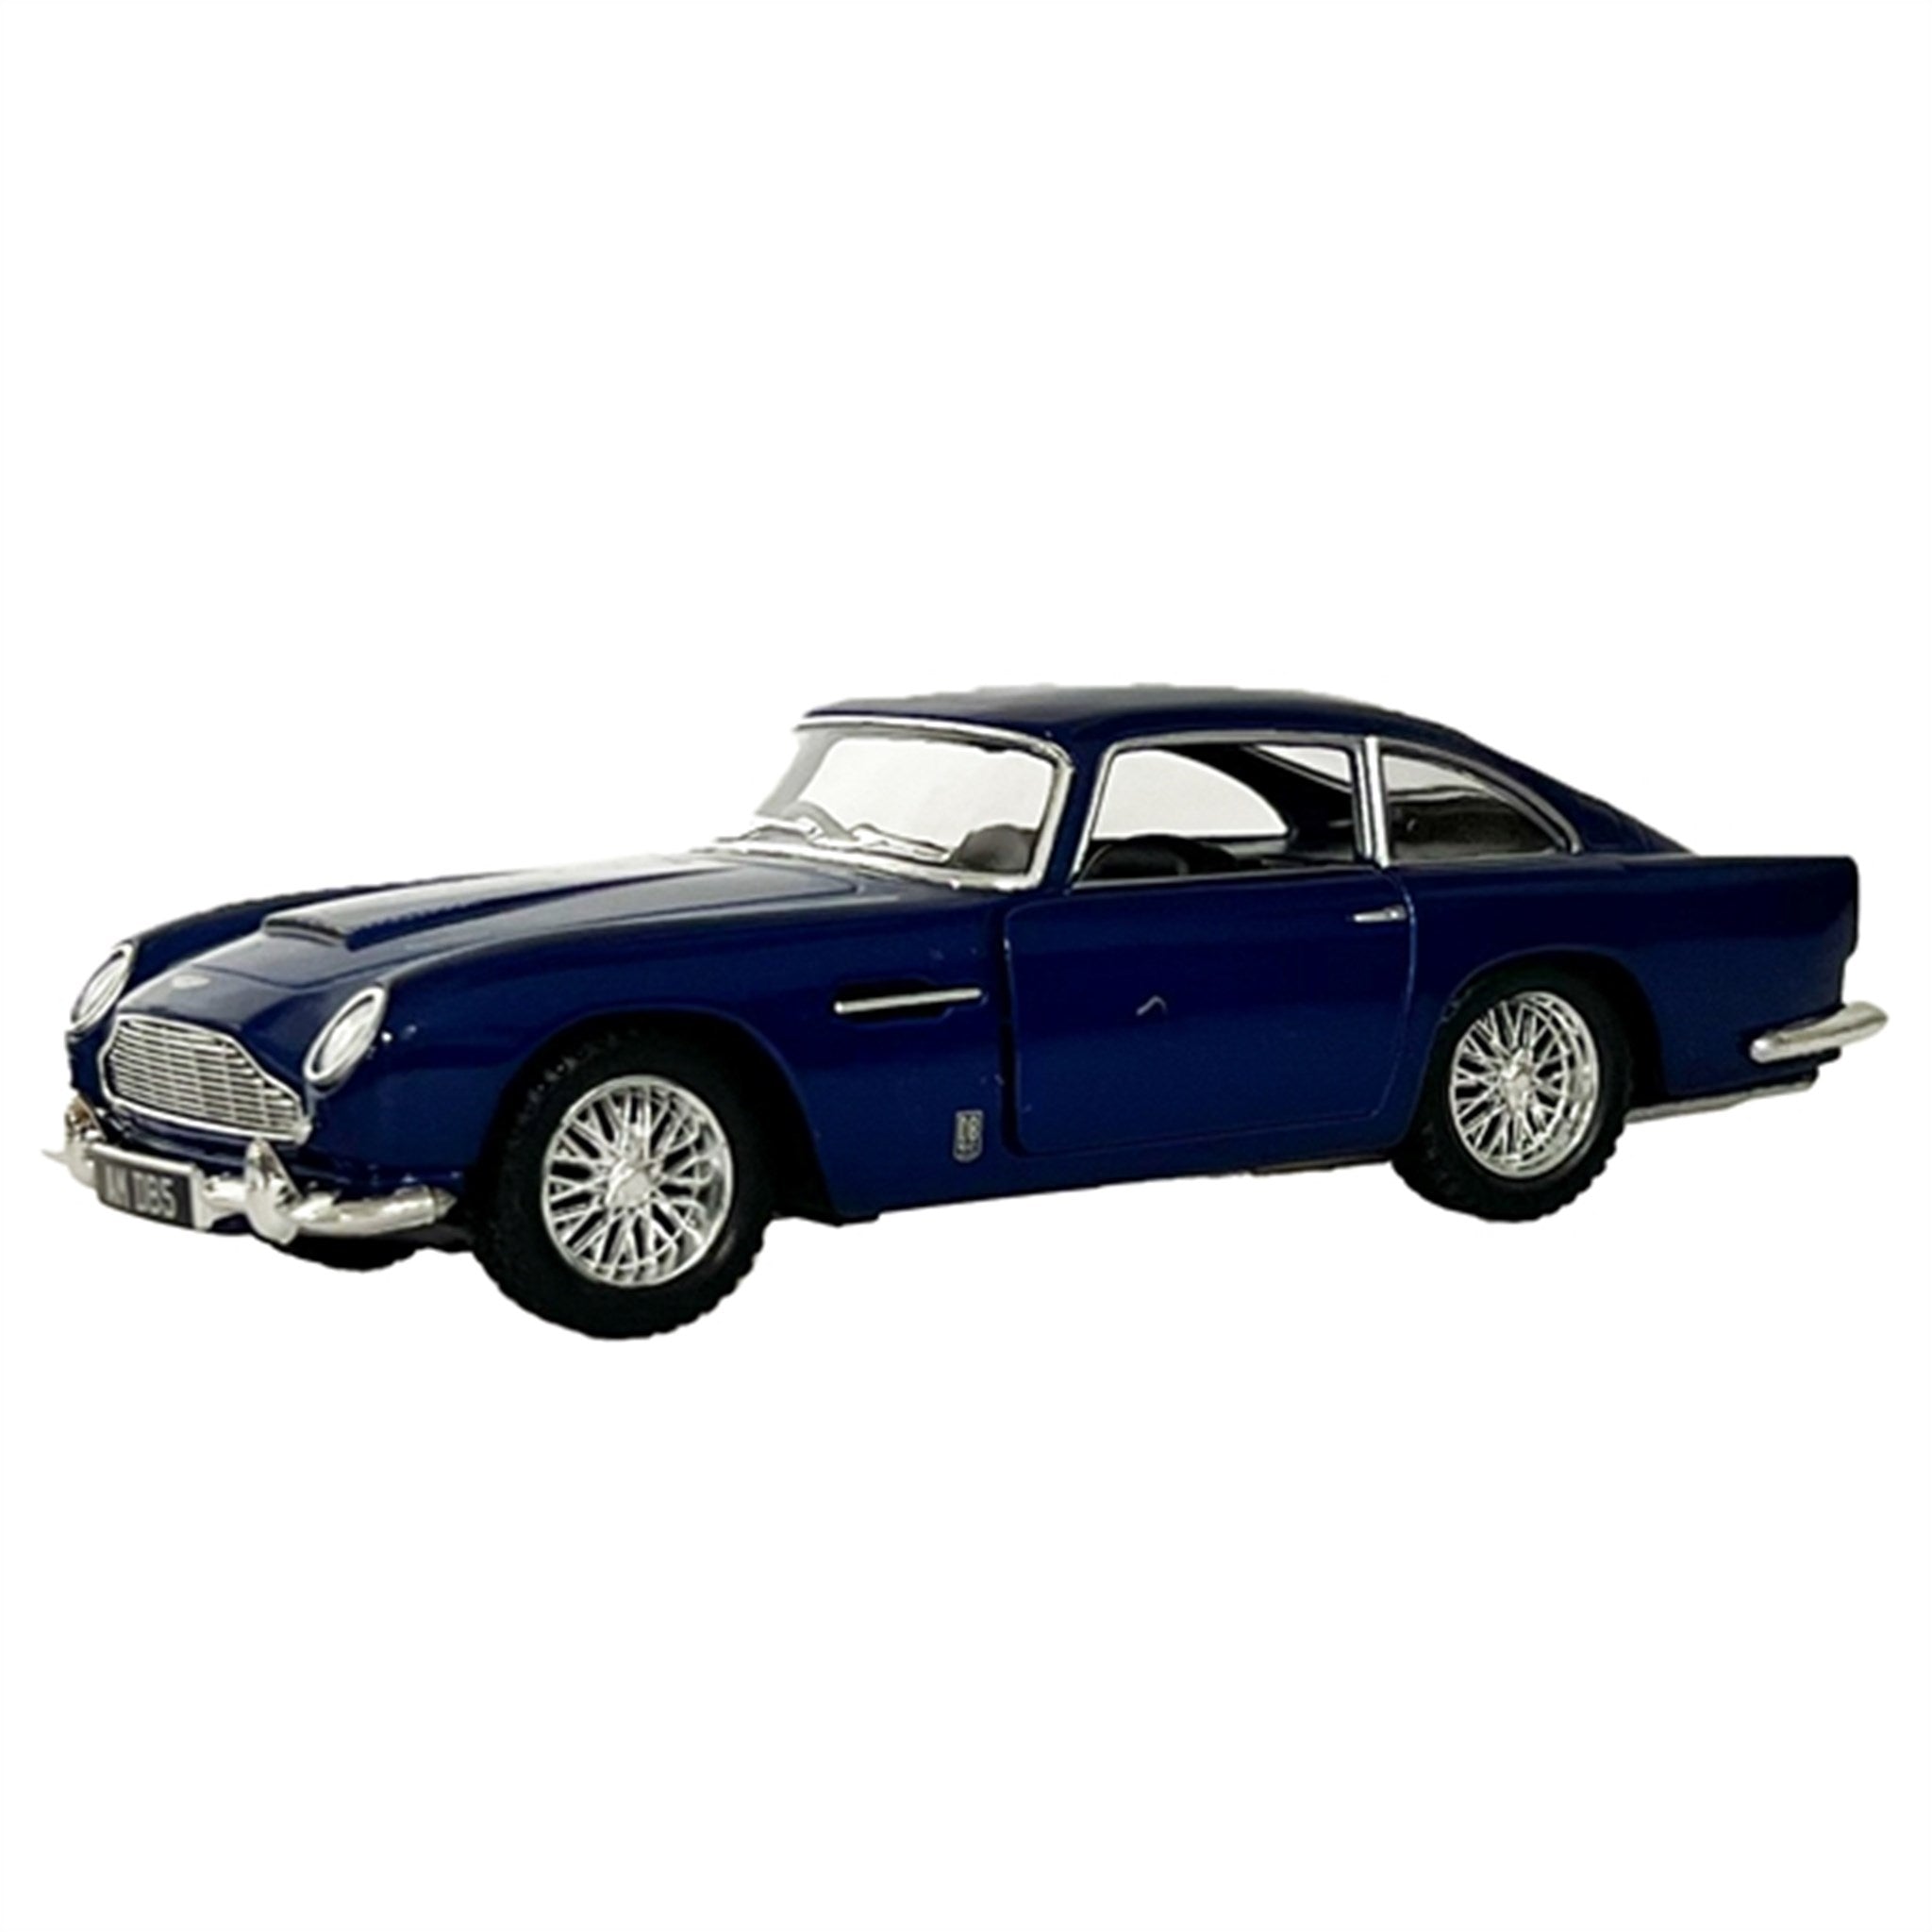 Magni Aston Martin - Blå